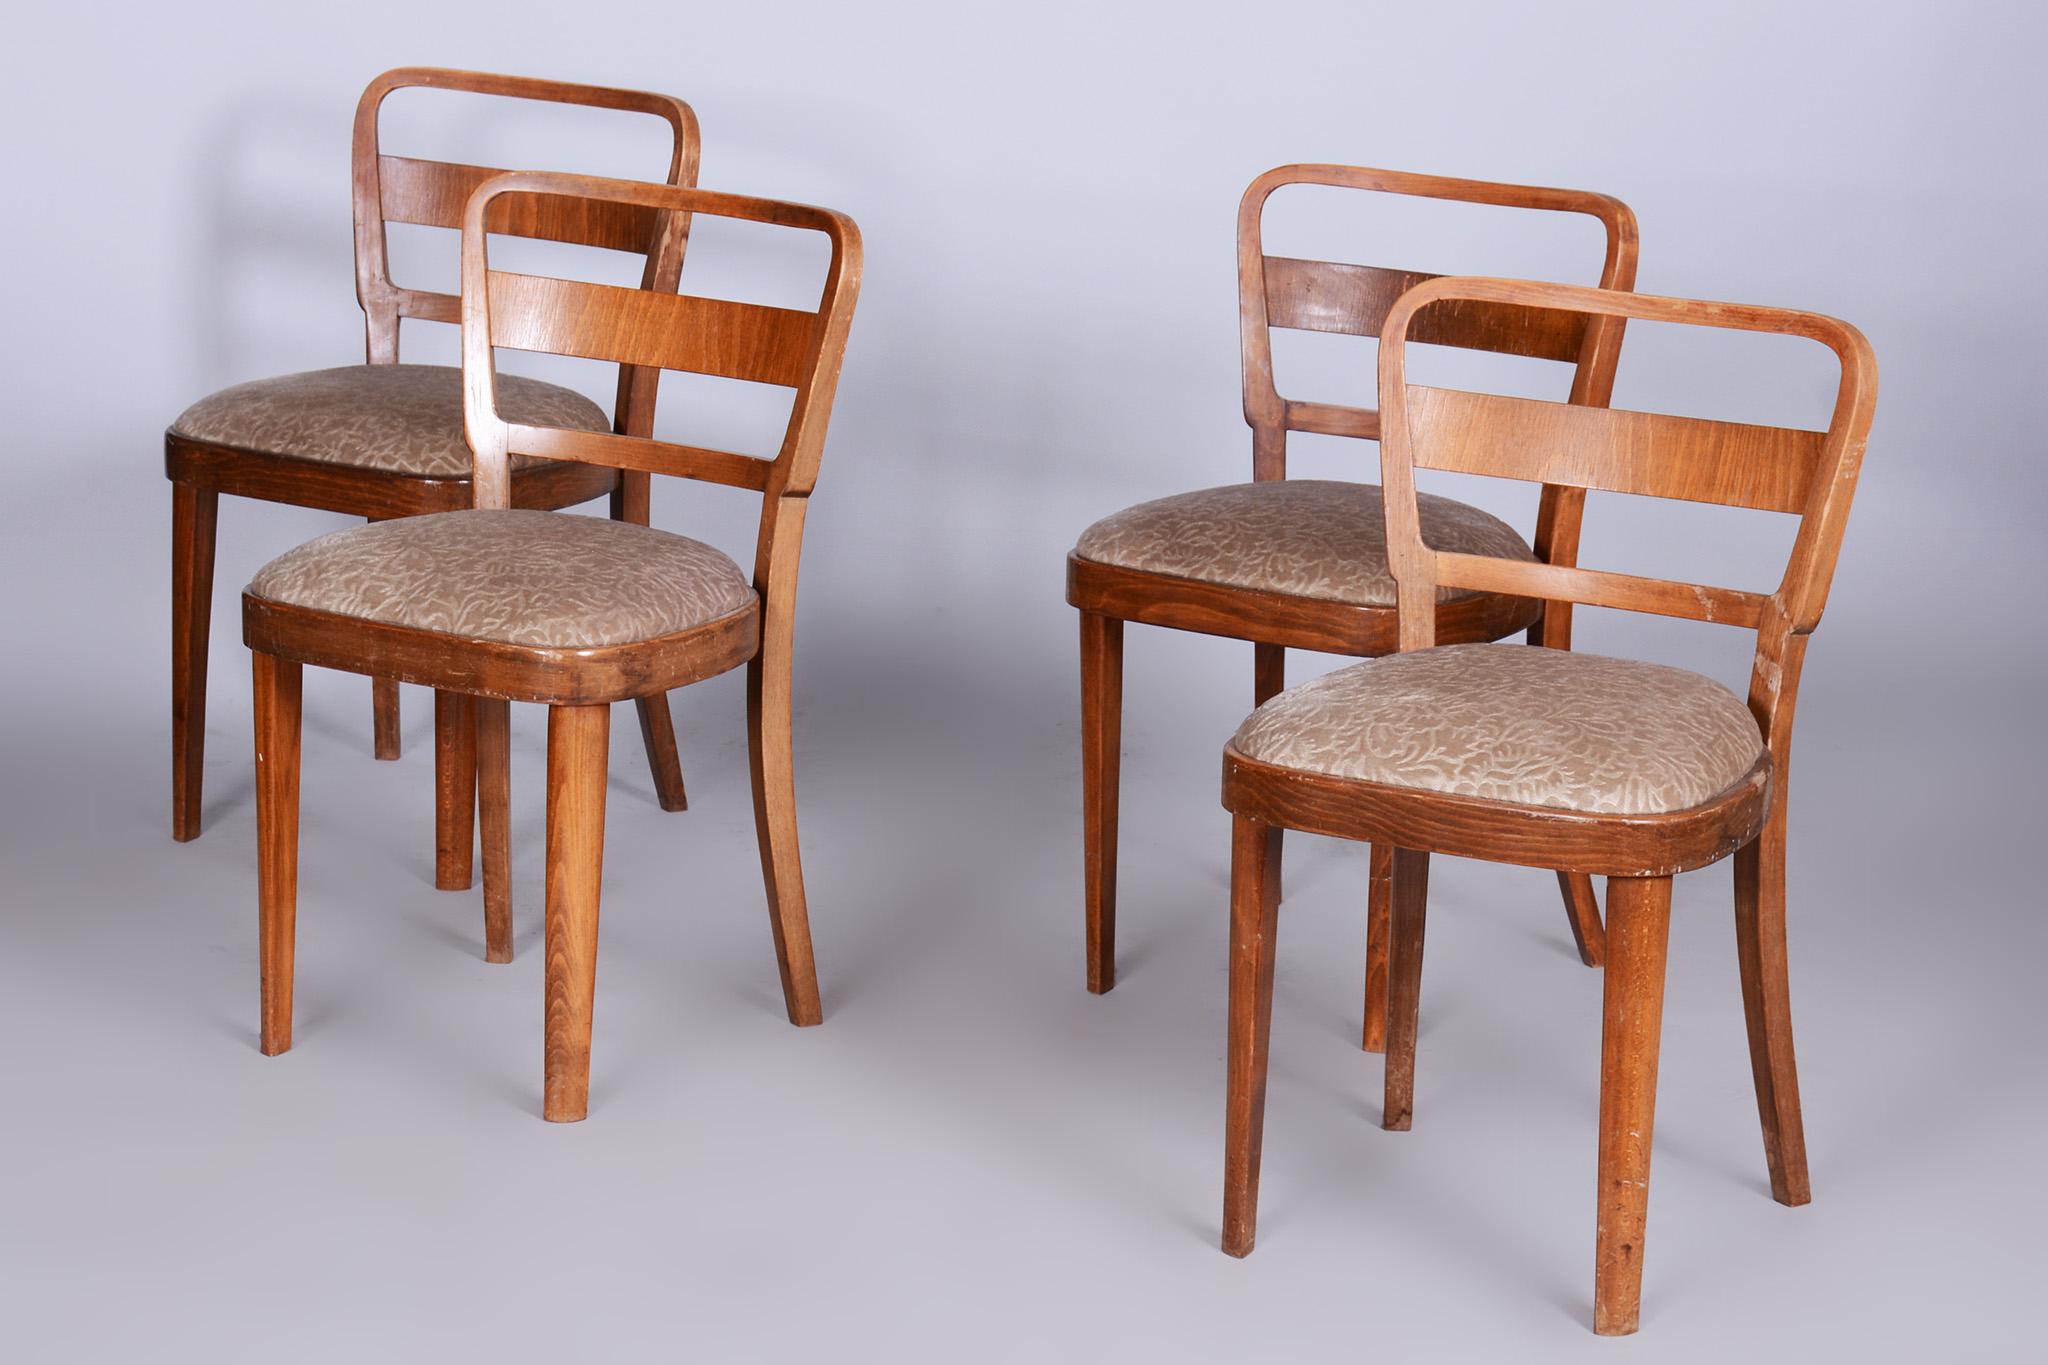 Set of Four Original Art Deco Chairs, Beech and Walnut, Thonet, Czechia, 1930s 1